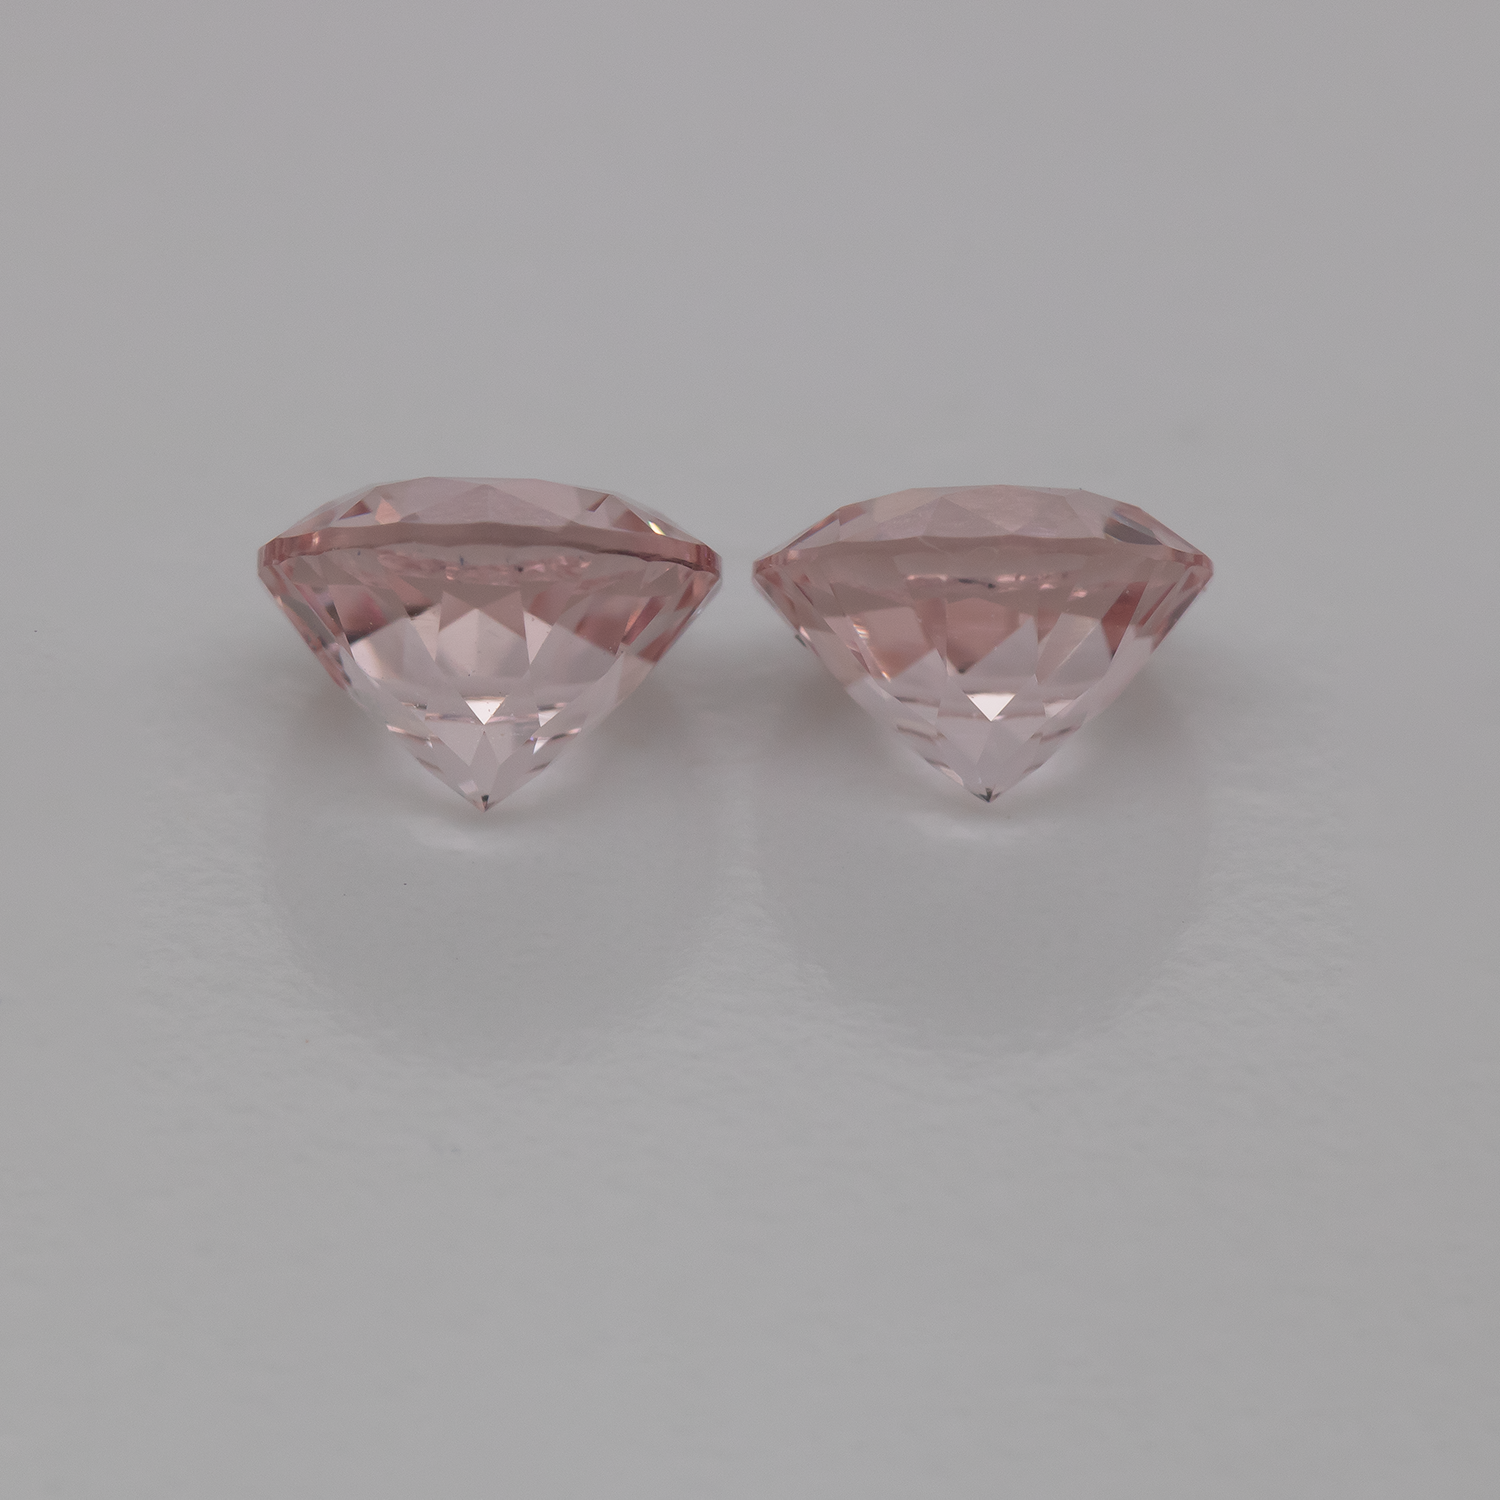 Morganit Paar - rosa, rund, 5x5 mm, 0.87 - 0.91 cts, Nr. MO46007